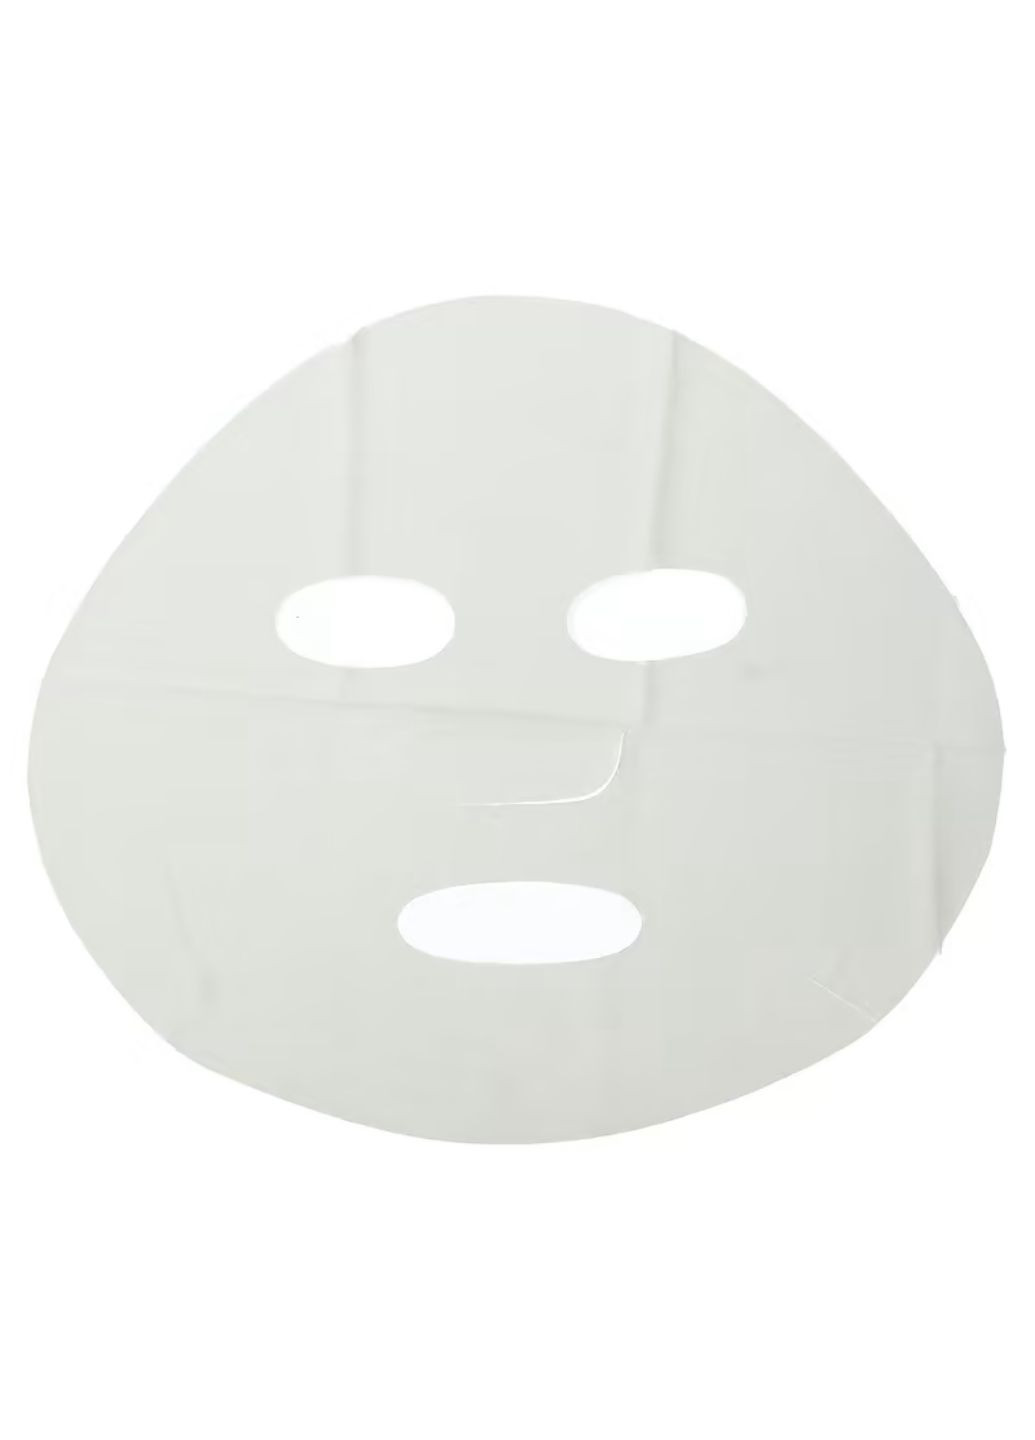 Тканевая маска для лица с экстрактом протеина шелка OneSpring Silver Silk Mask, 30 мл One Spring (277167274)